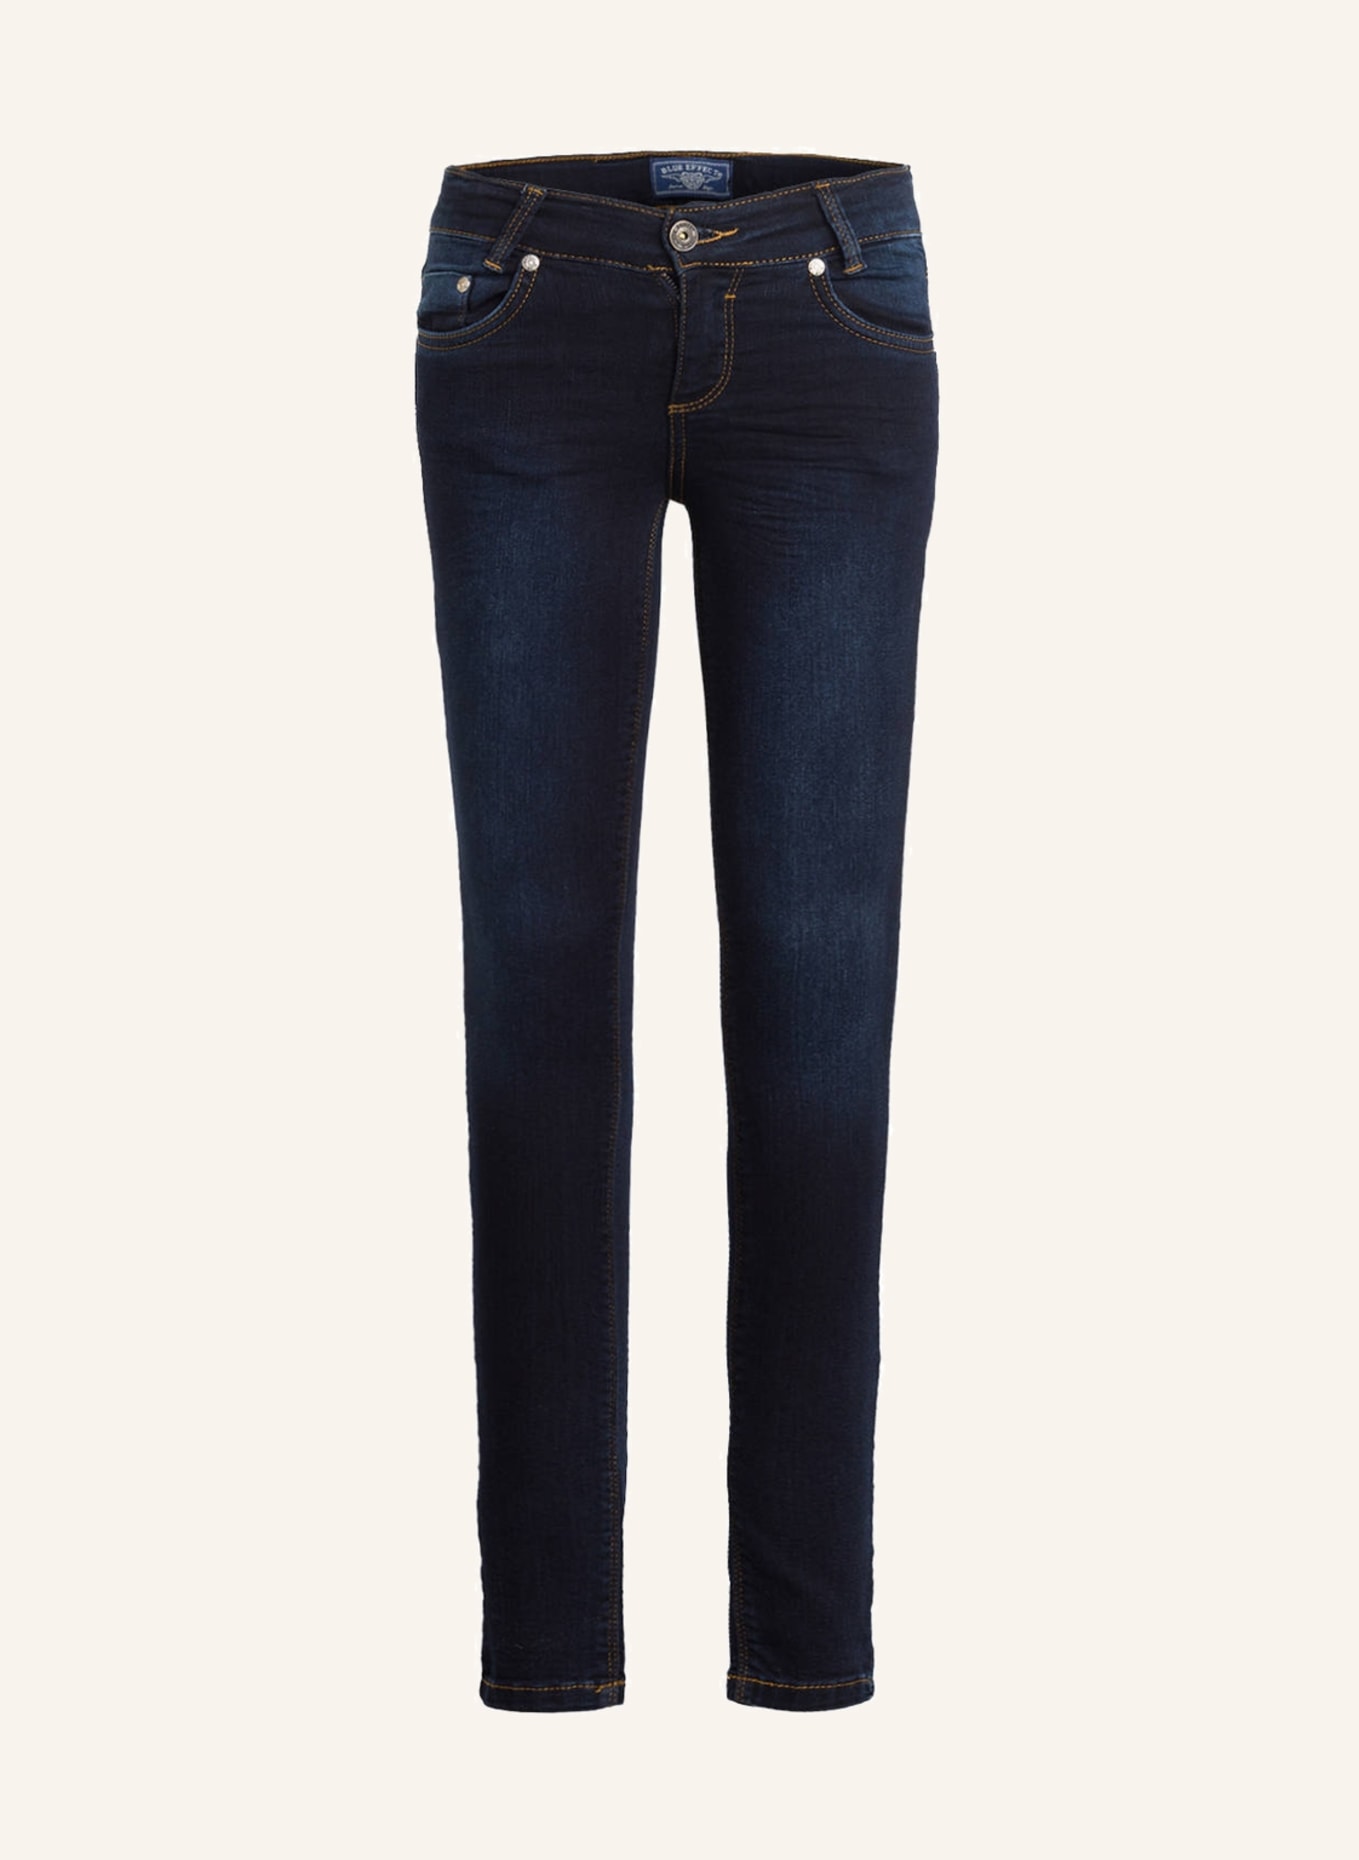 BLUE EFFECT Jeans Slim Fit, Farbe: 9620 darkblue soft used (Bild 1)